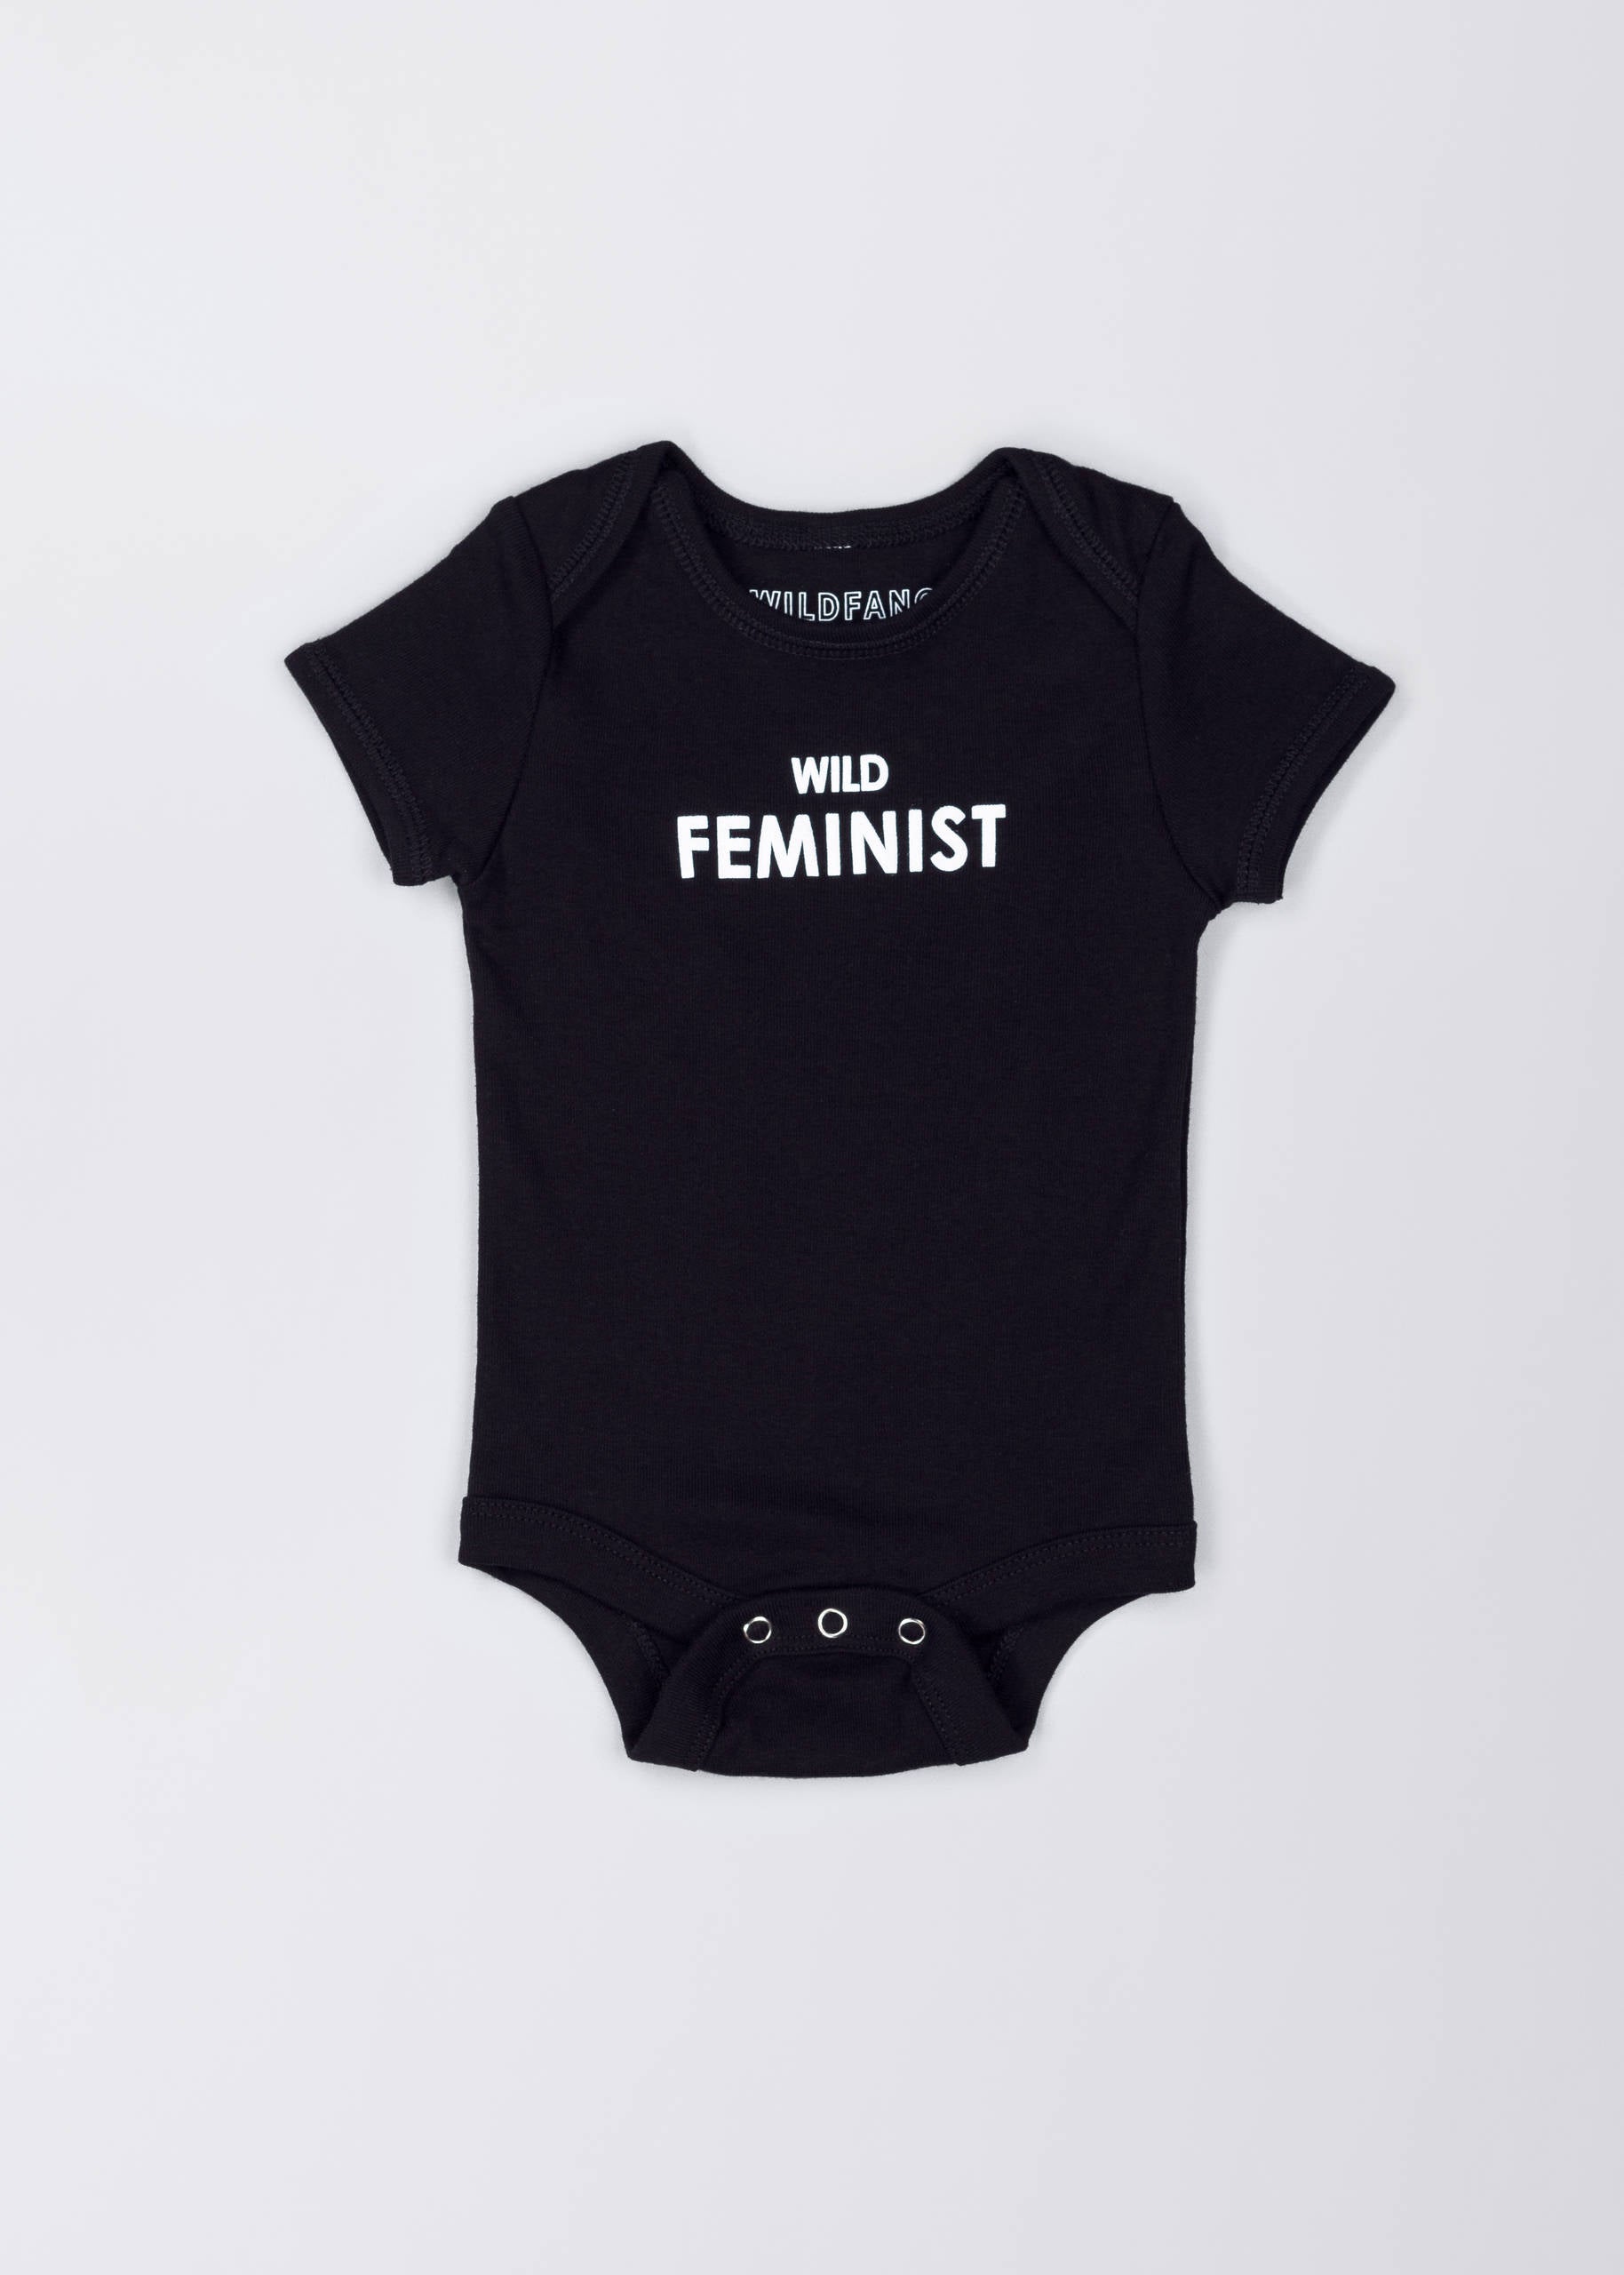 feminist baby onesie